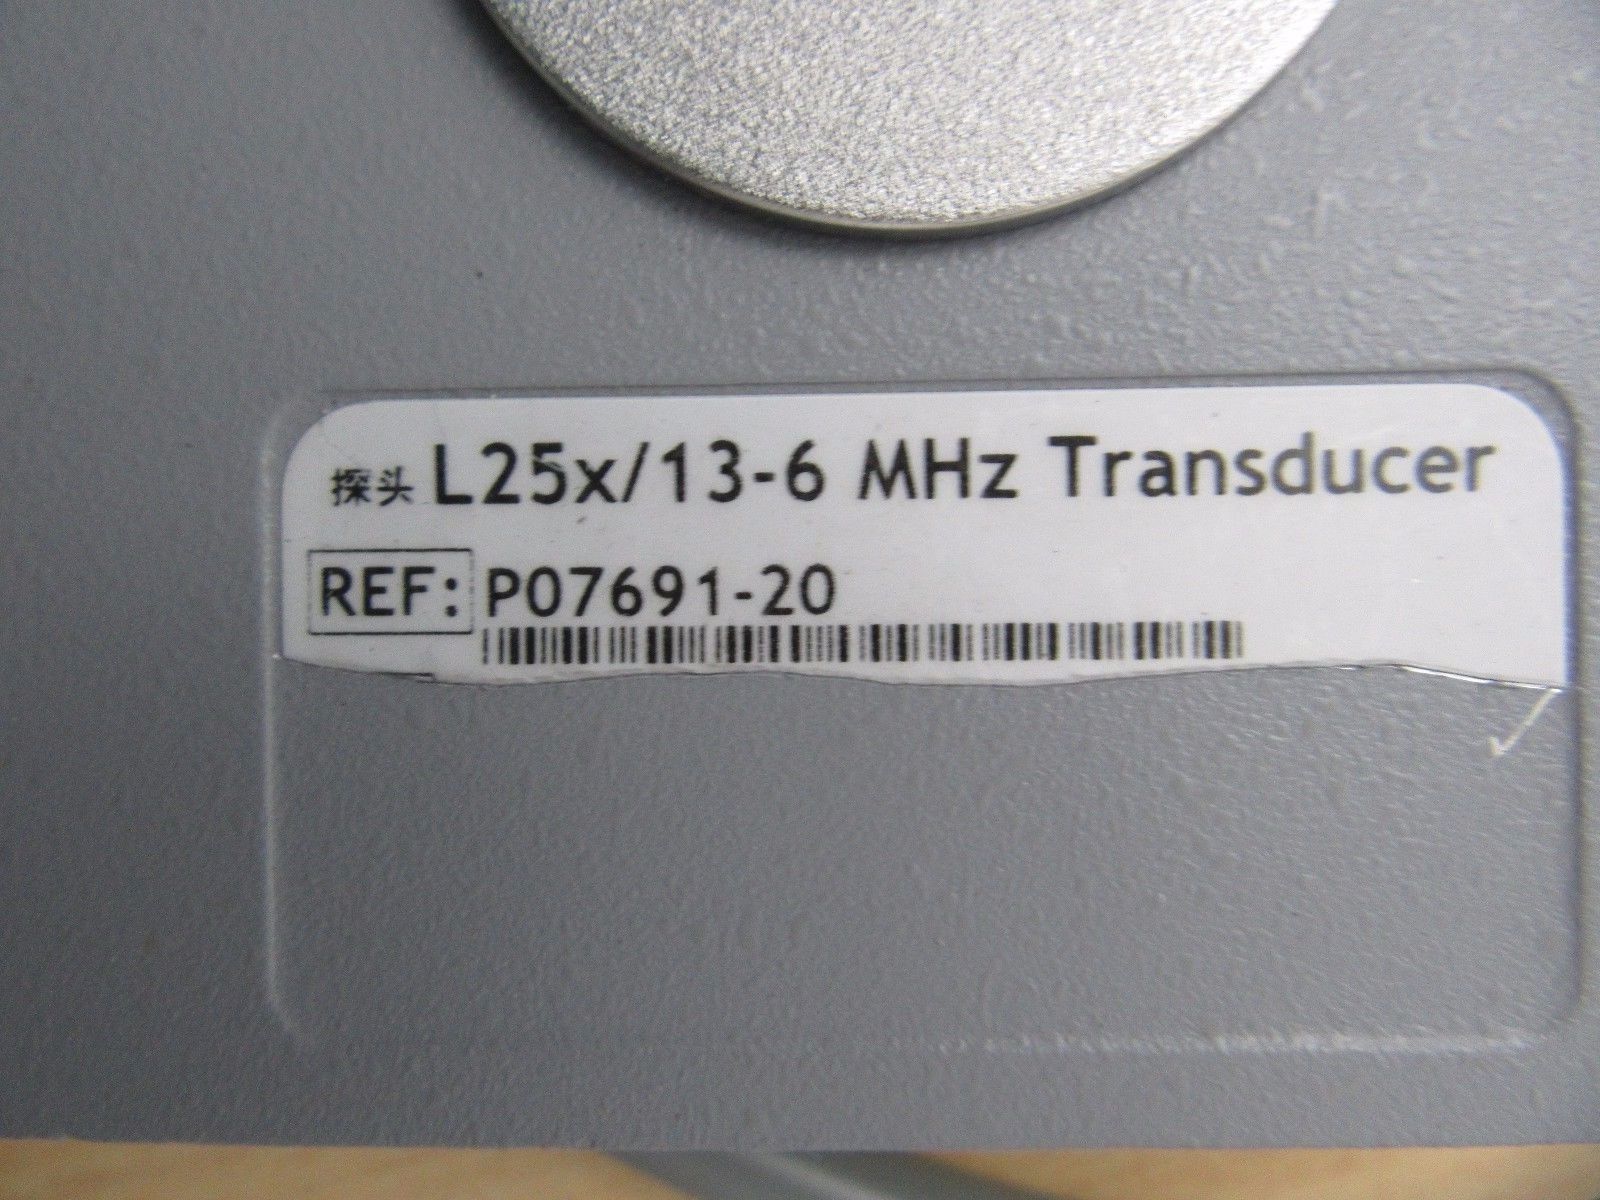 Sonosite L25x/13-6 Probe Ultrasound Transducer REF# P07691-20 DIAGNOSTIC ULTRASOUND MACHINES FOR SALE